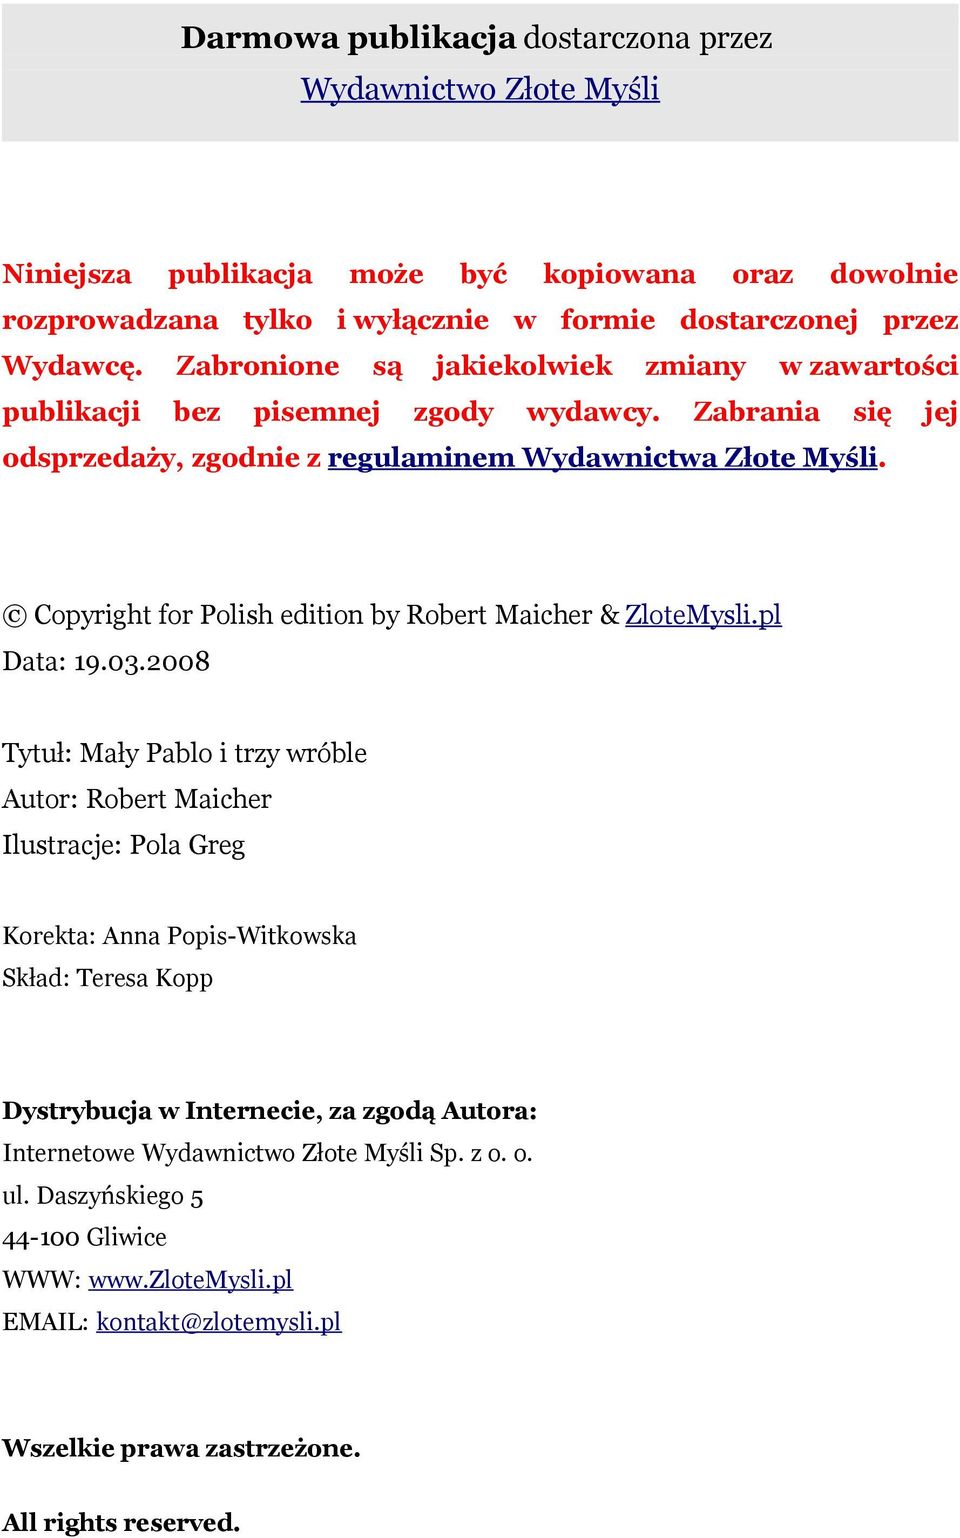 Copyright for Polish edition by Robert Maicher & ZloteMysli.pl Data: 19.03.